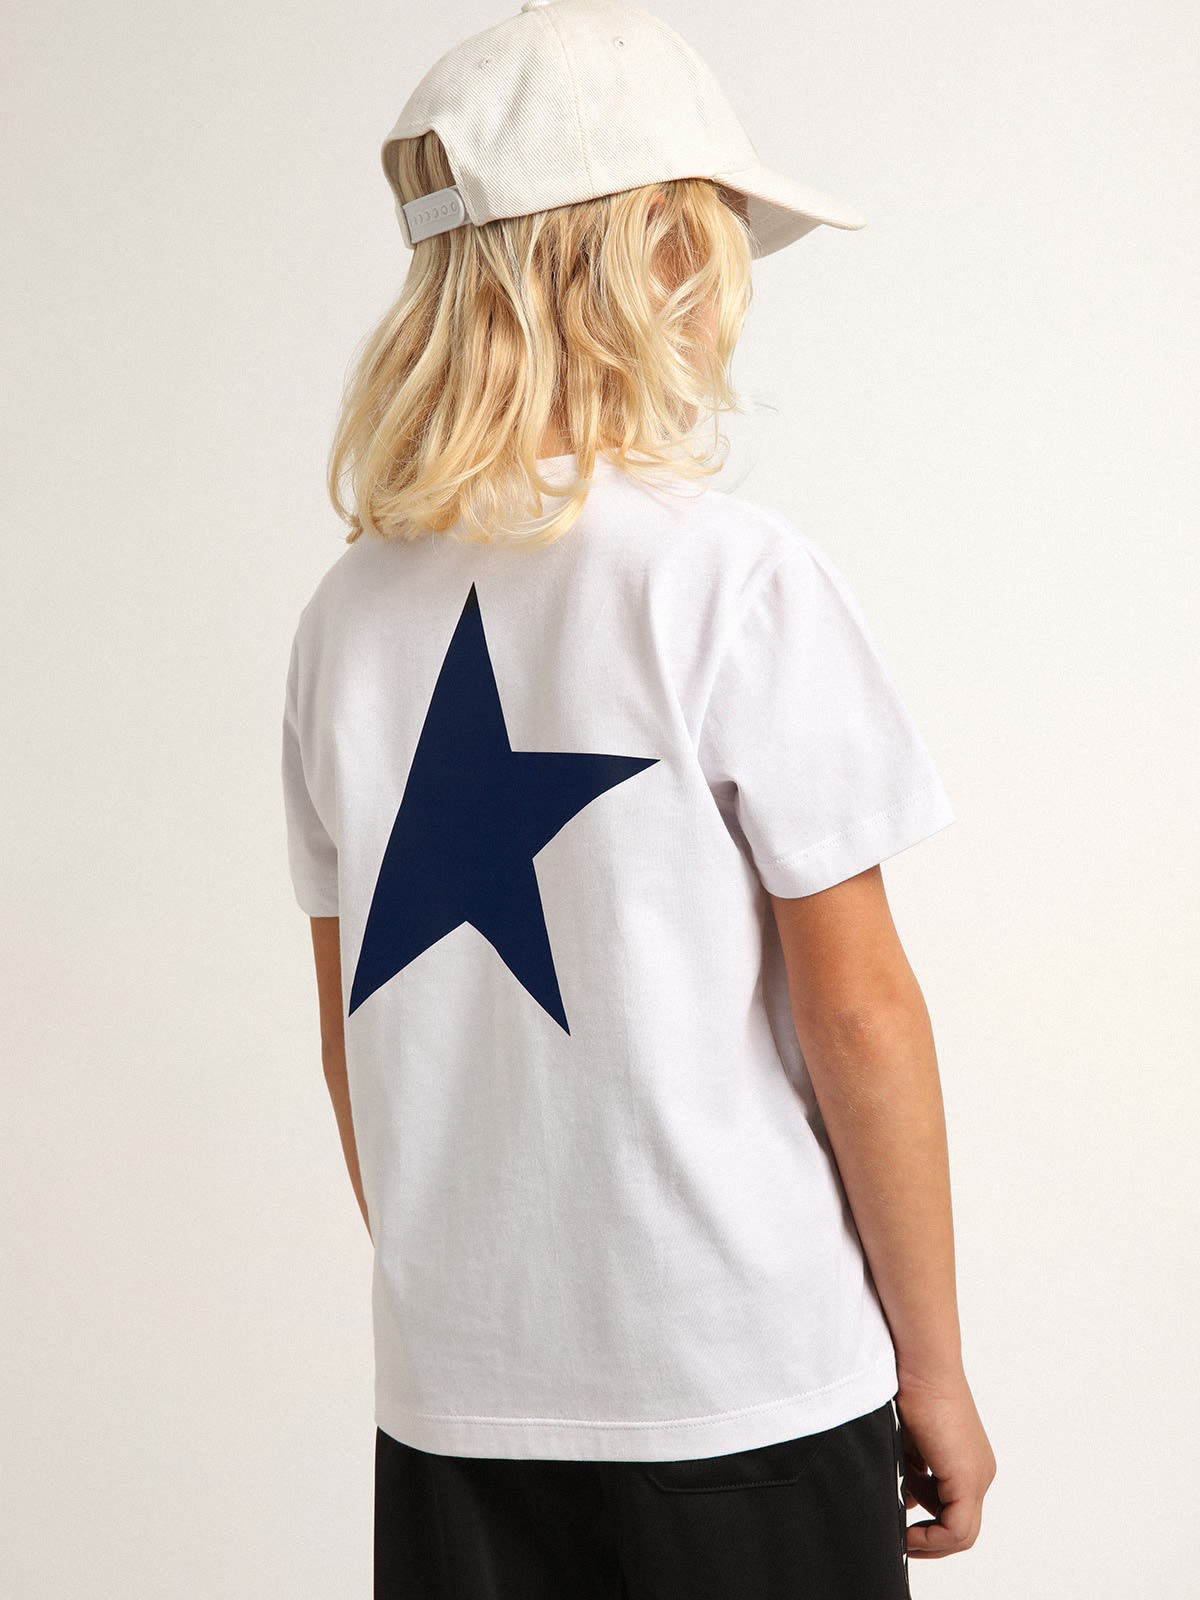 Golden Goose - T-shirt blanc garçon avec logo et étoile bleu foncé contrastés in 